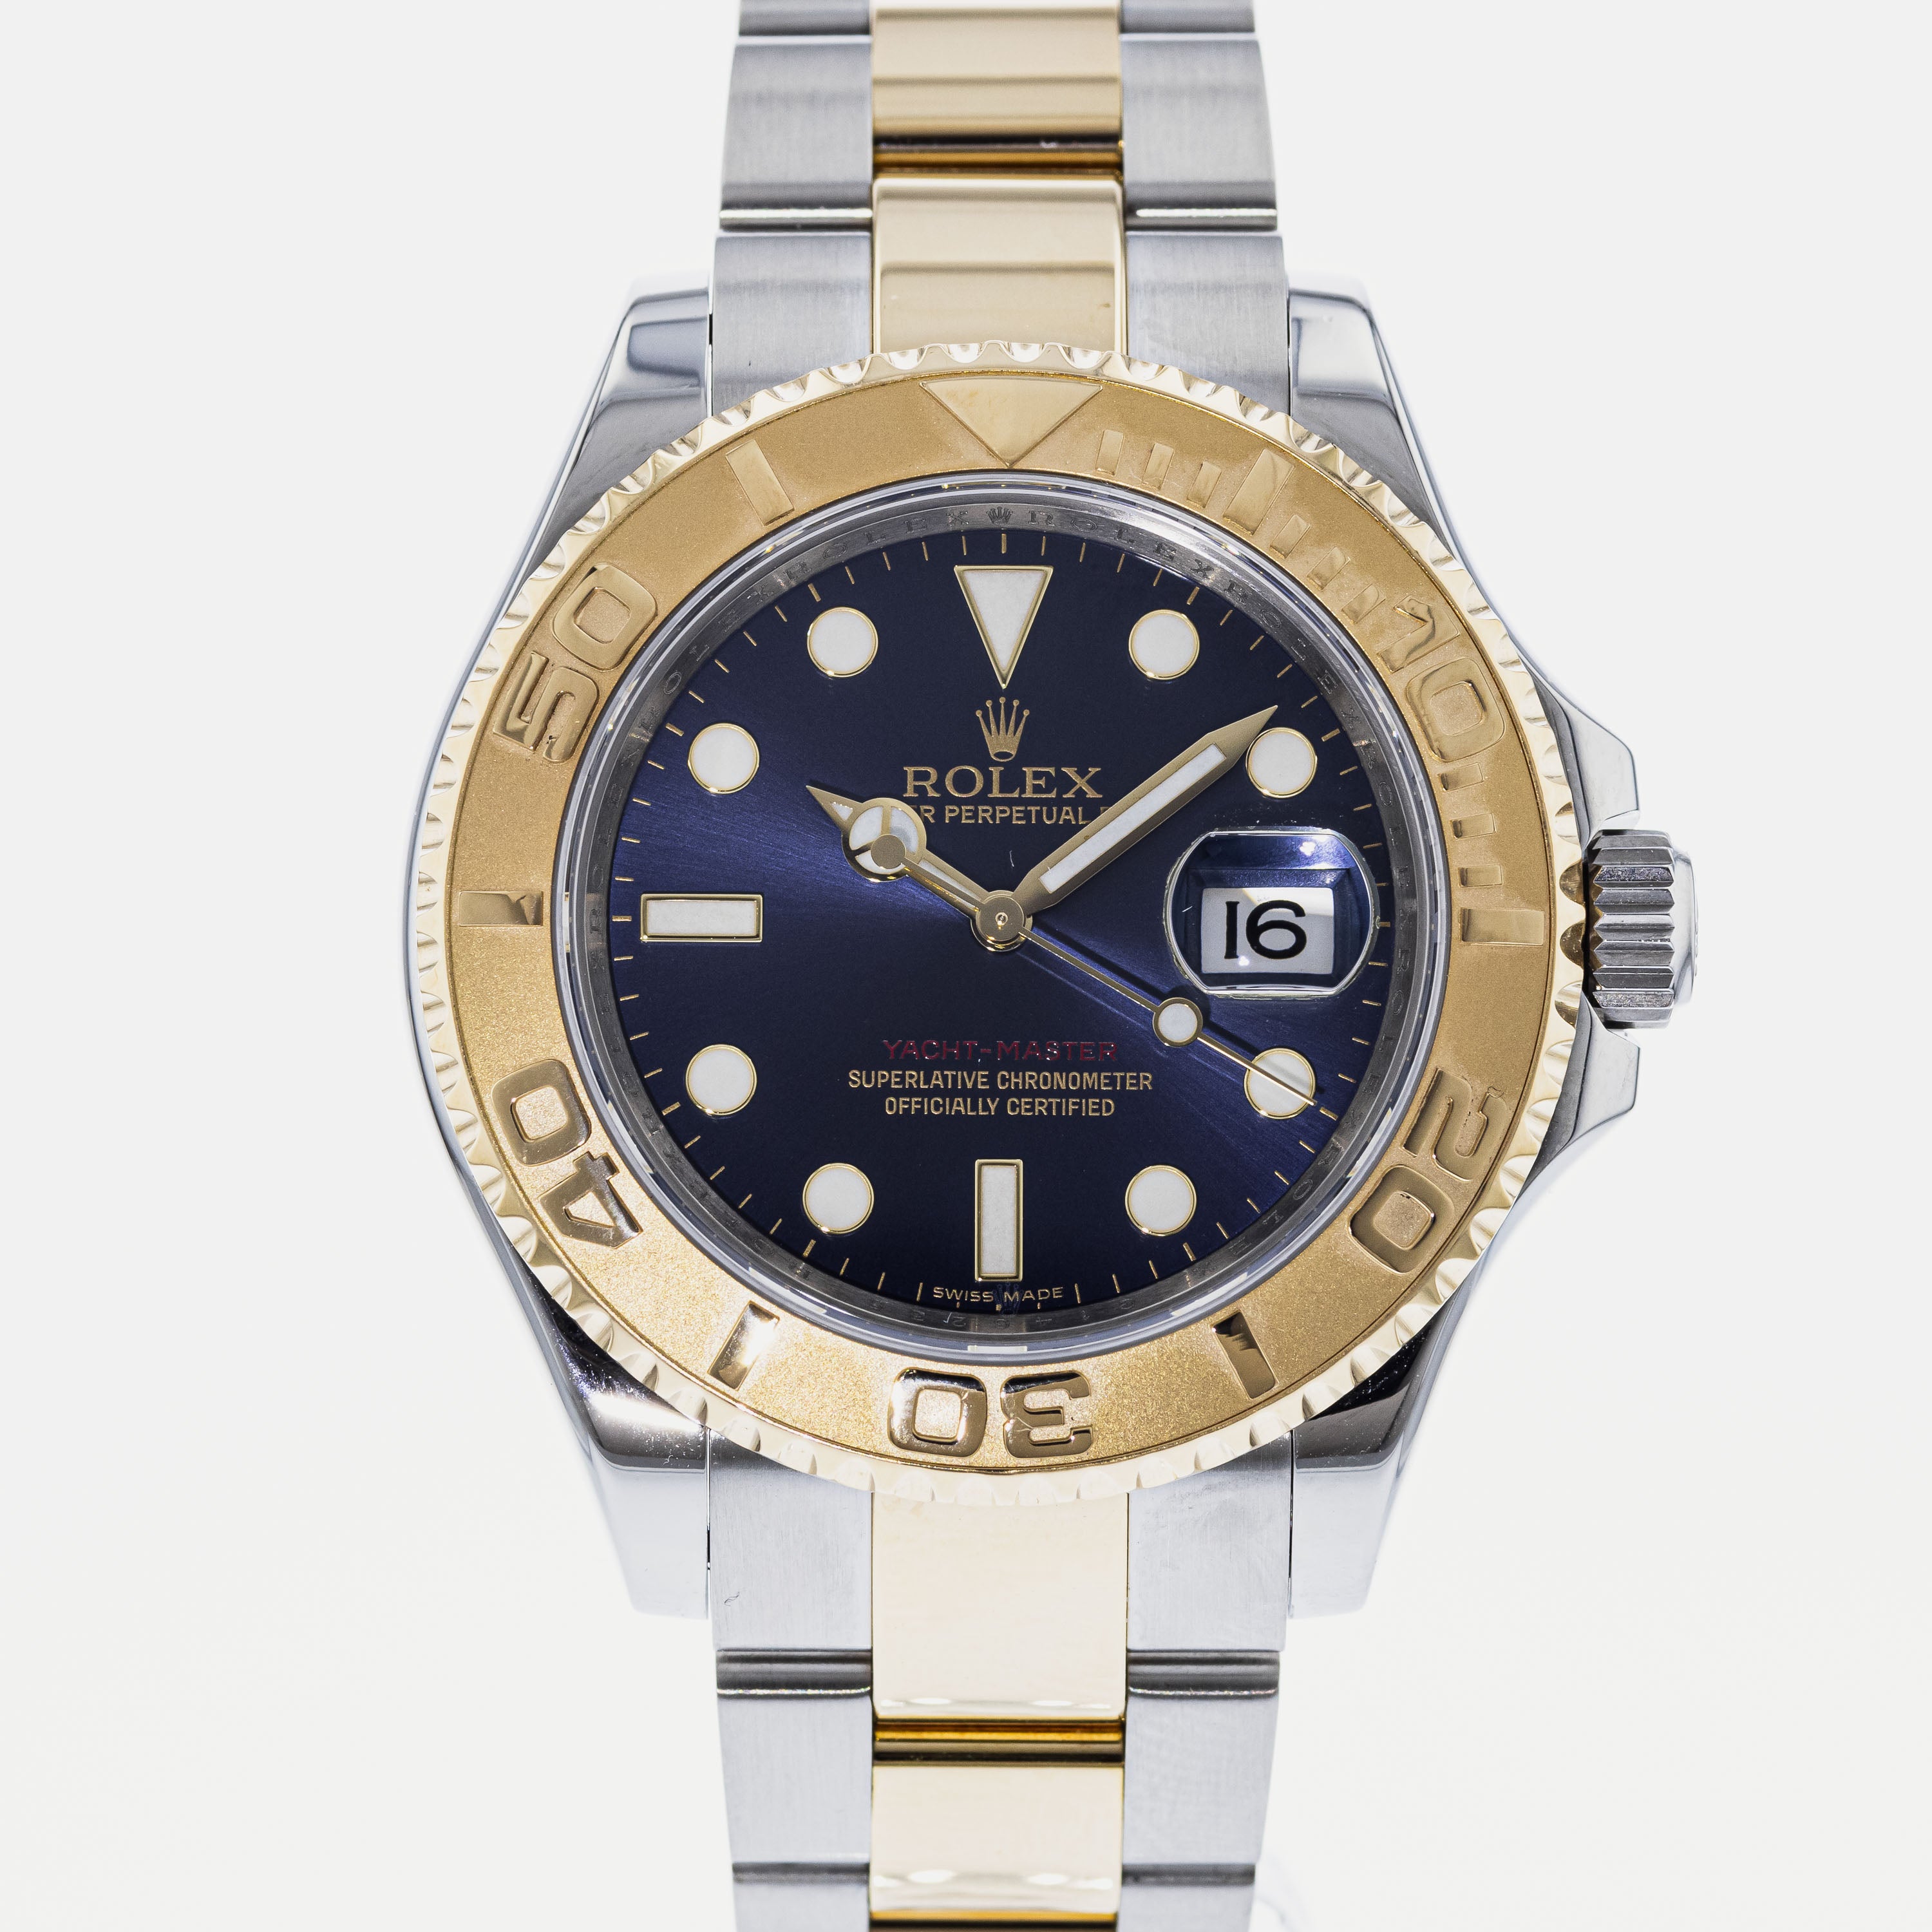 Rolex Yacht-Master 16623 - Men's Watch - Blue Dial